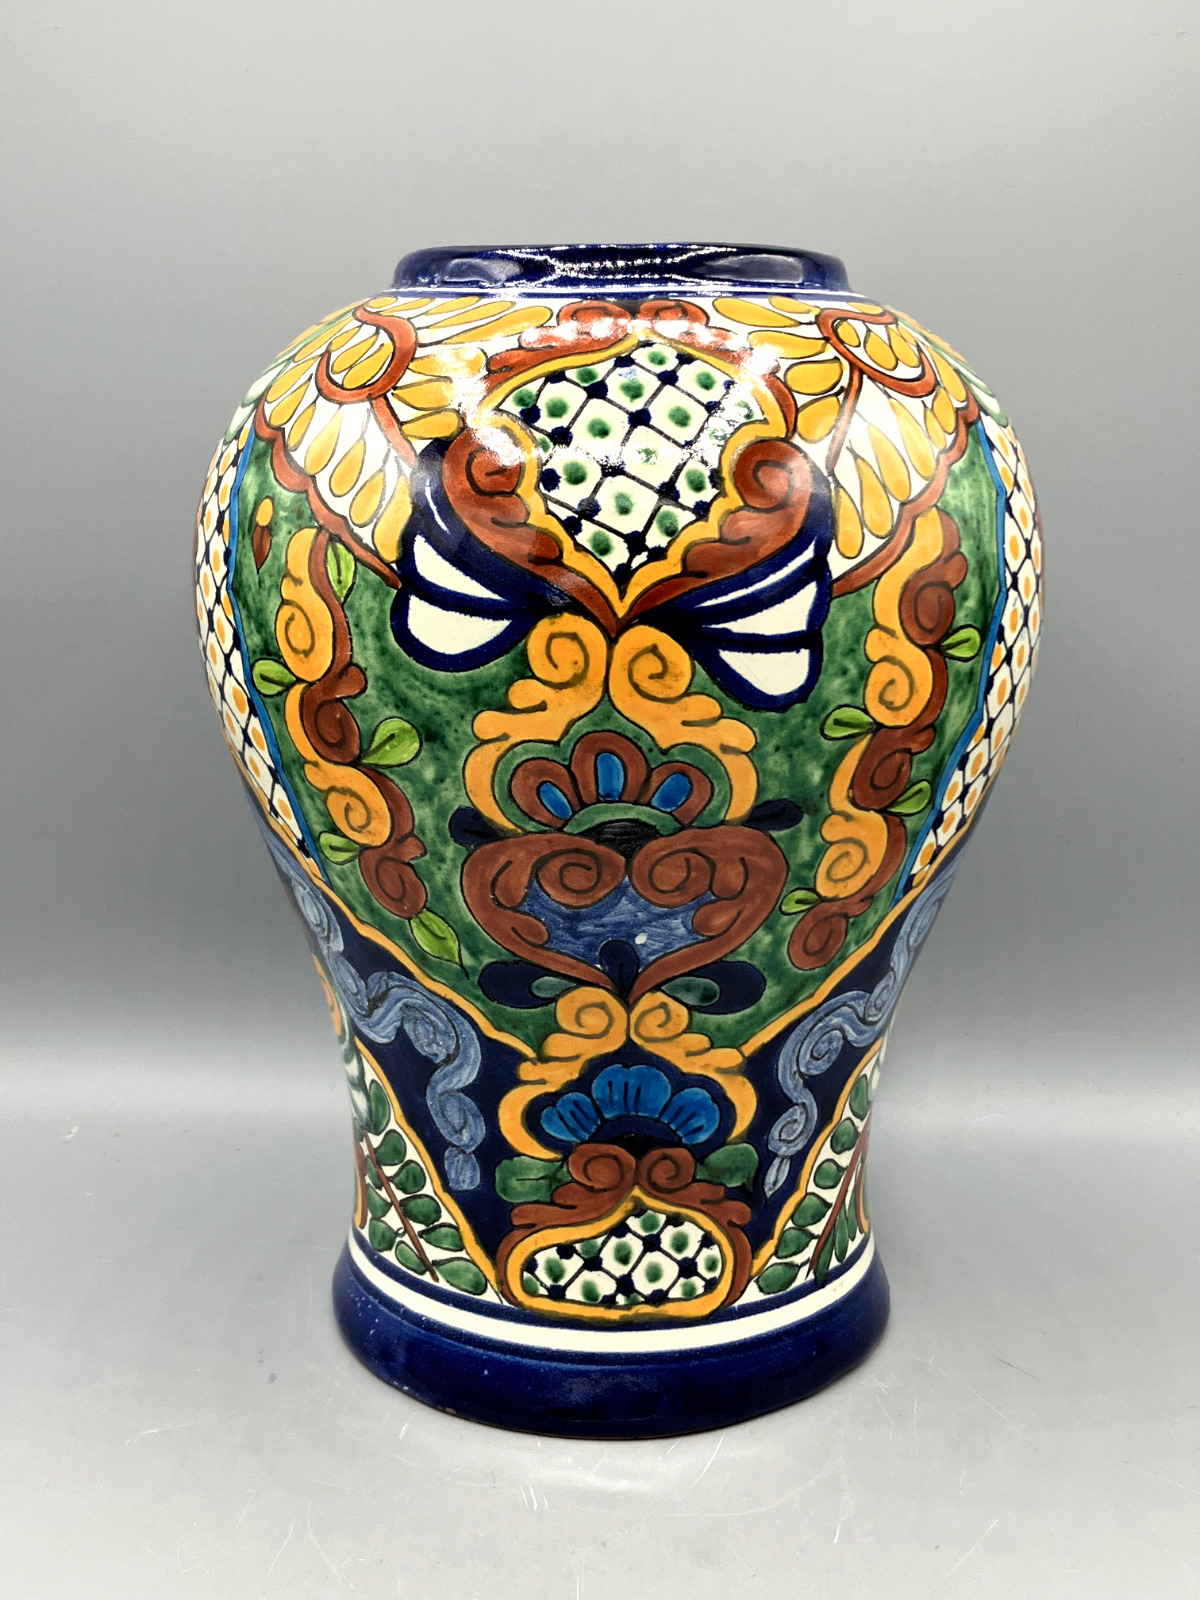 Beautiful Talavera Mexico Vintage Large Hand-Painted Vase